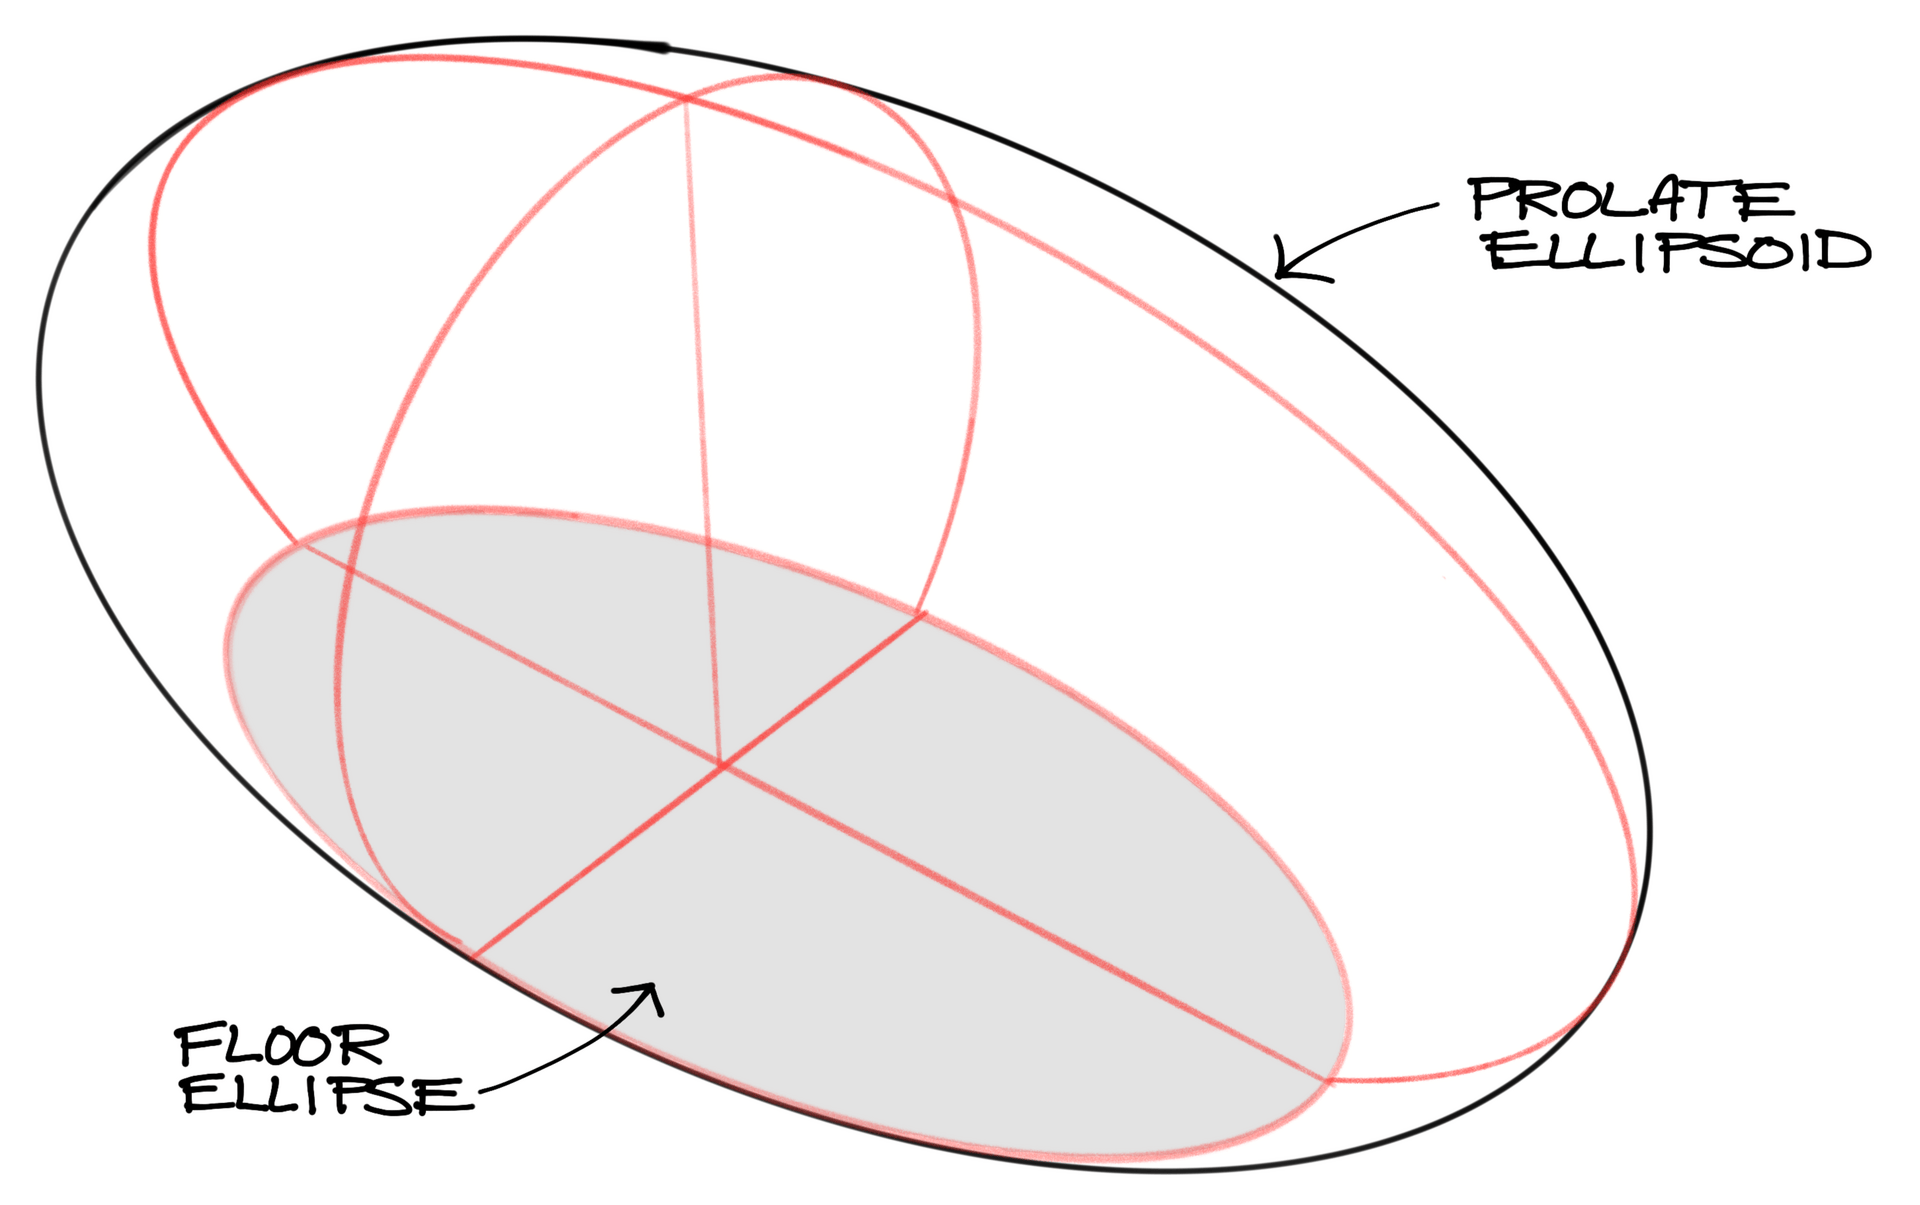 Sketch of a horizontal prolate ellipsoid.